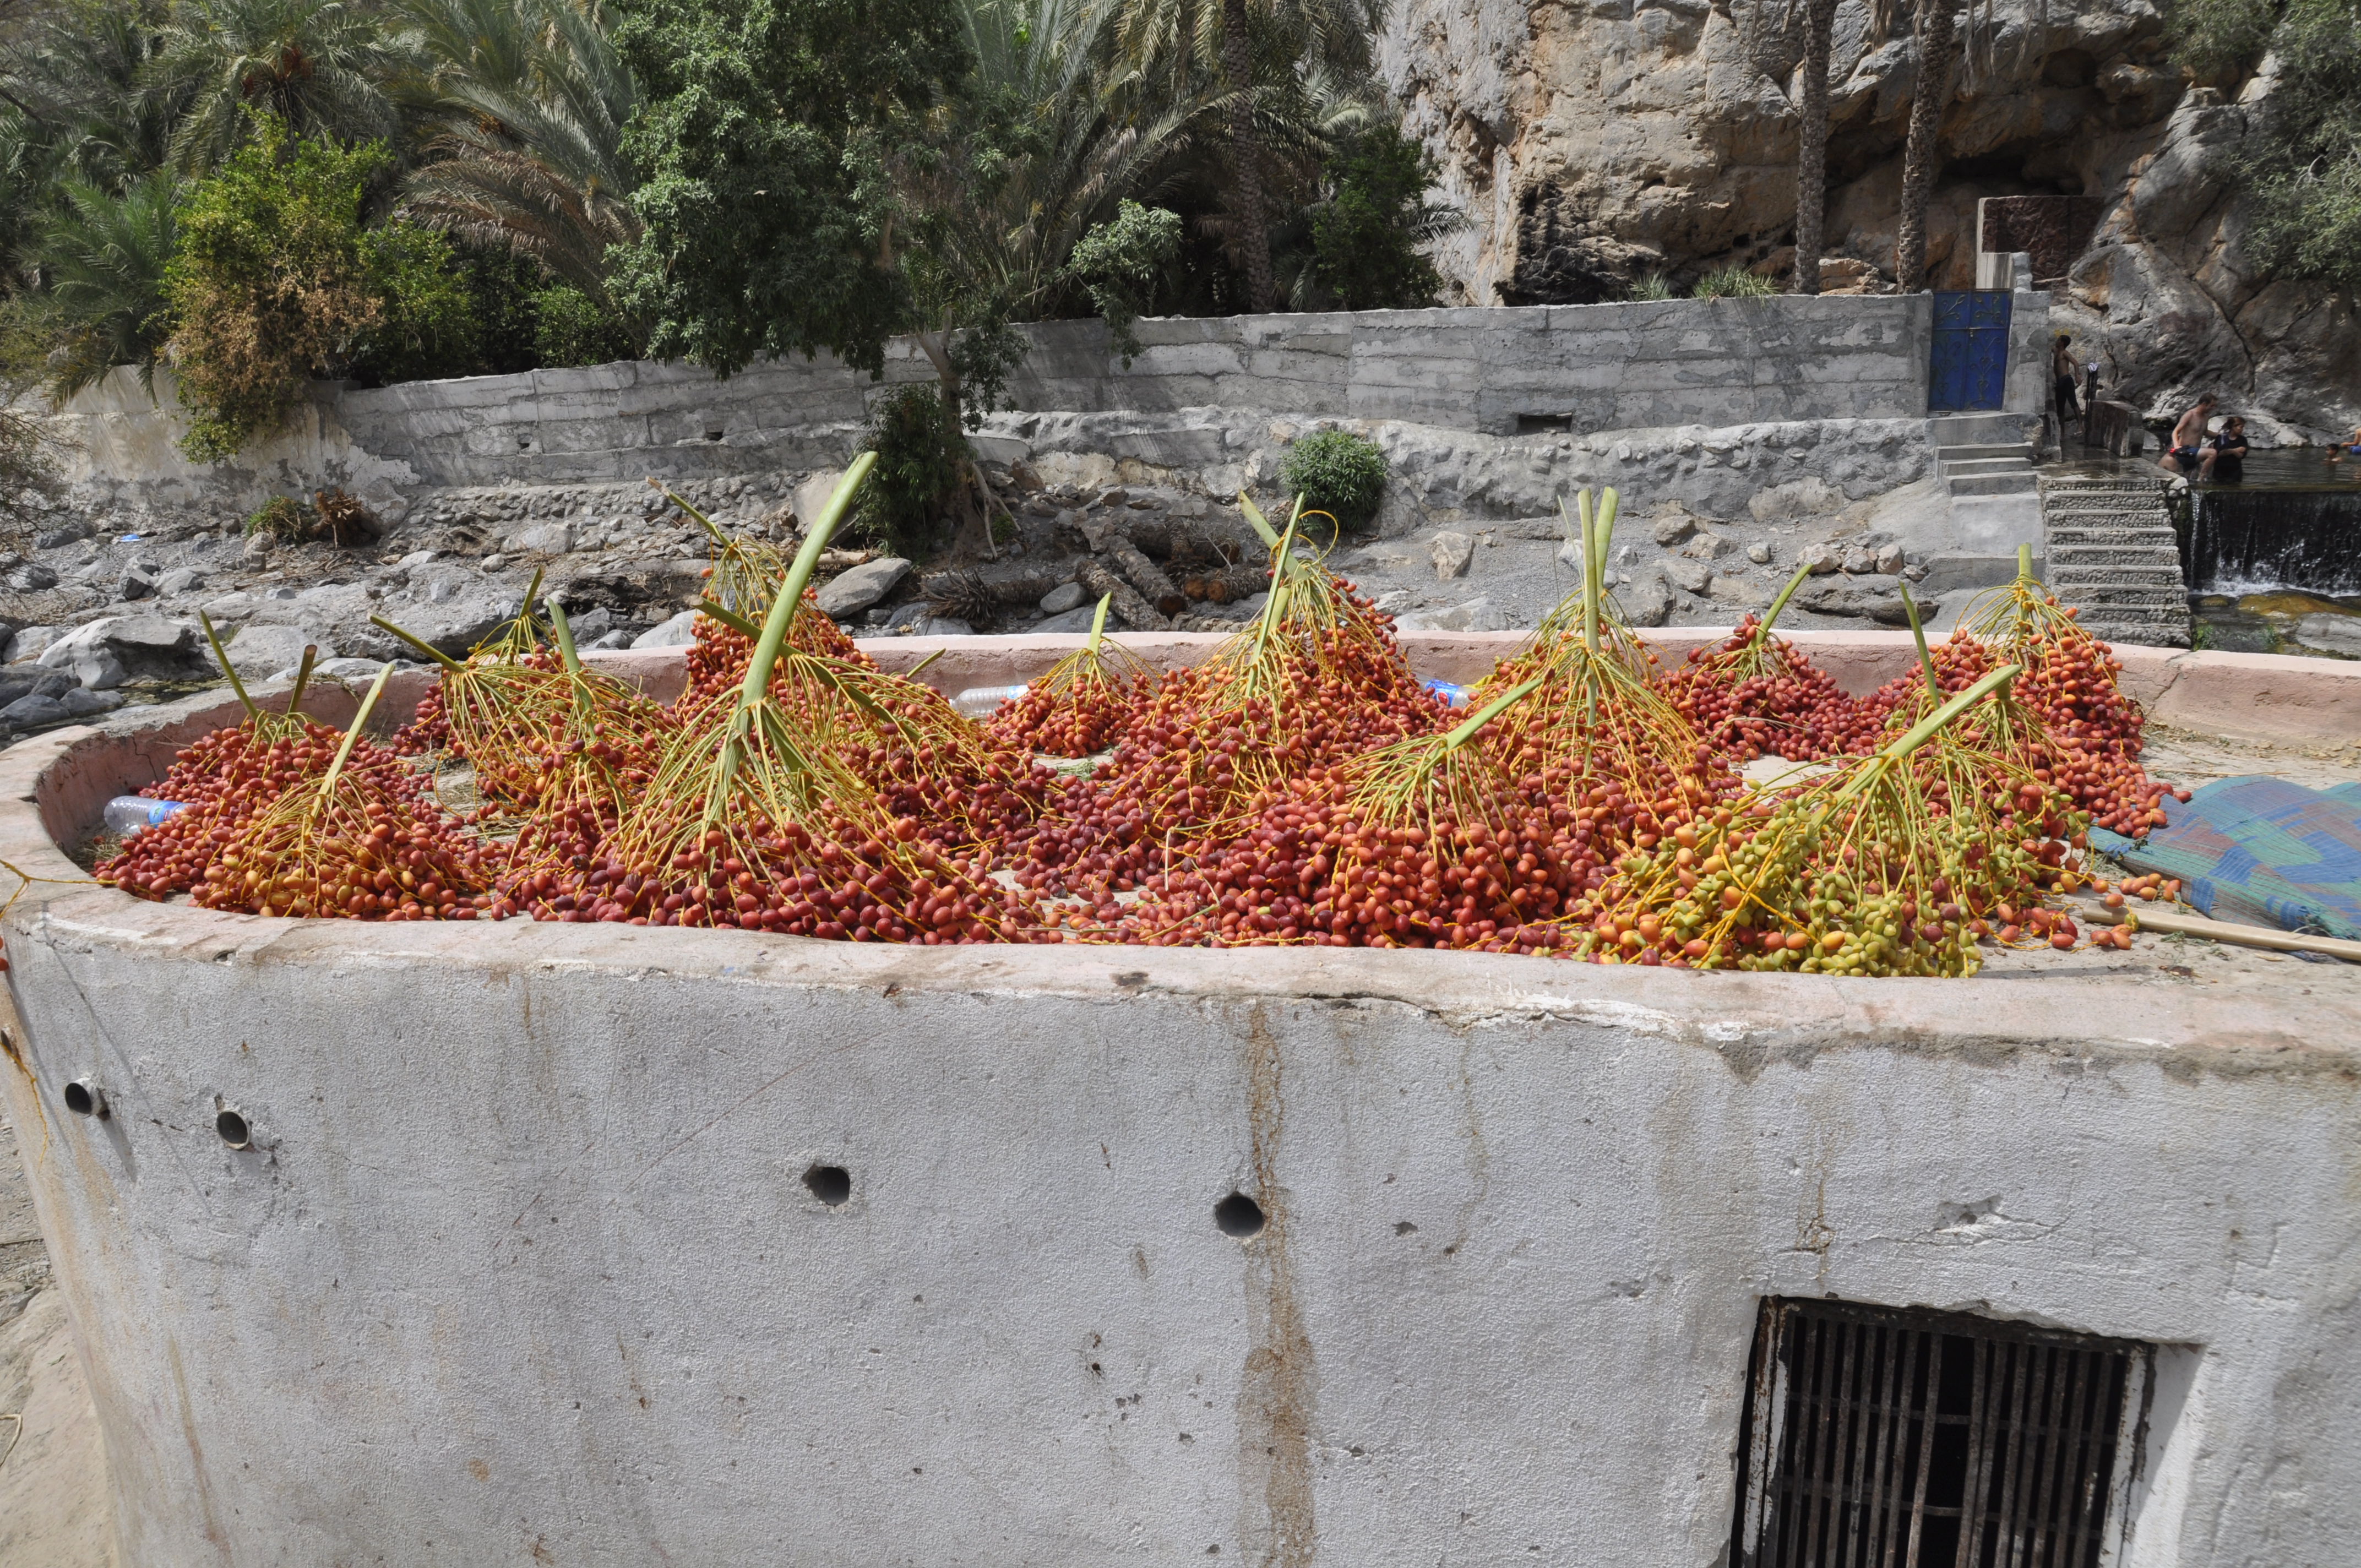 Oman culture: Date harvest season in Oman